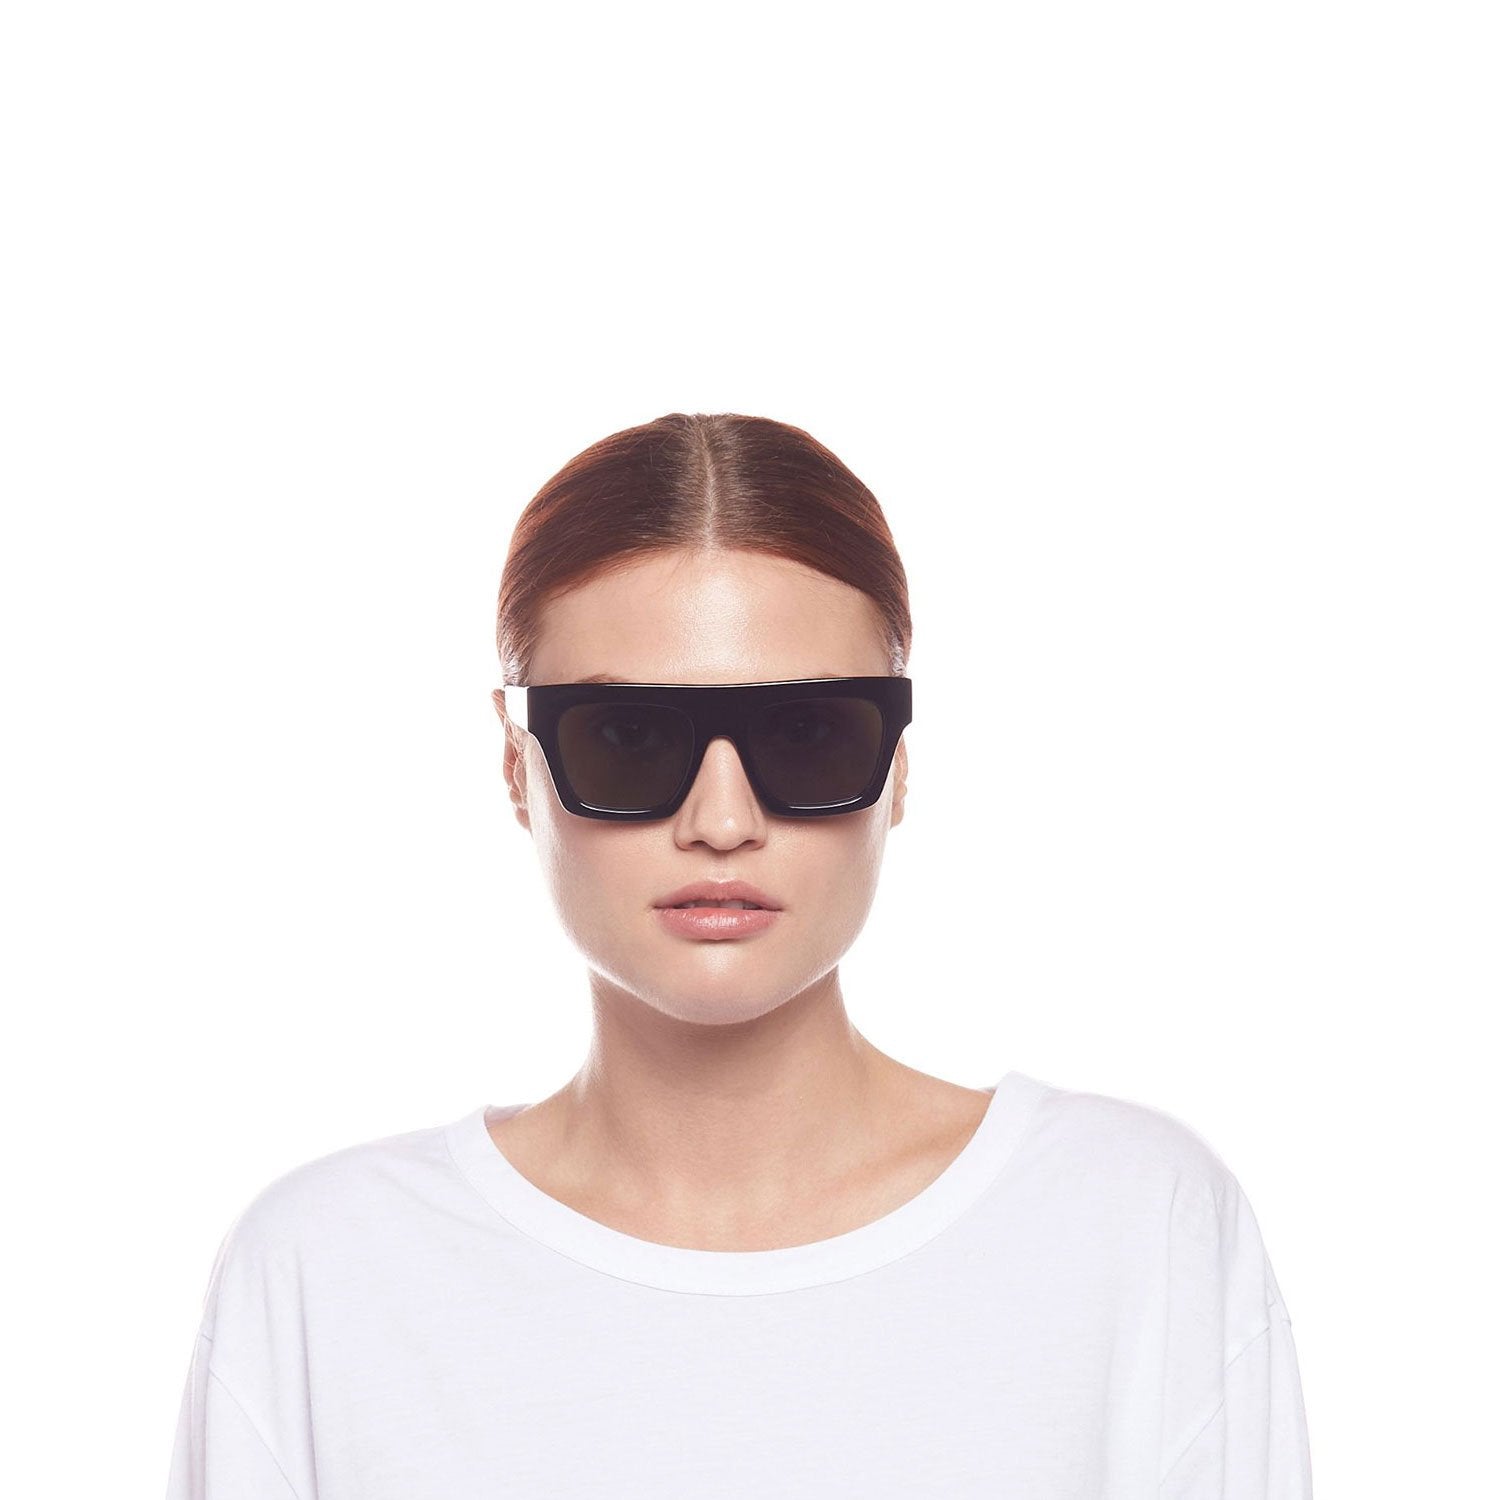 UNIKONCEPT Lifestyle Boutique and Lounge; Le Specs Subdimension sunglasses in Black on a model